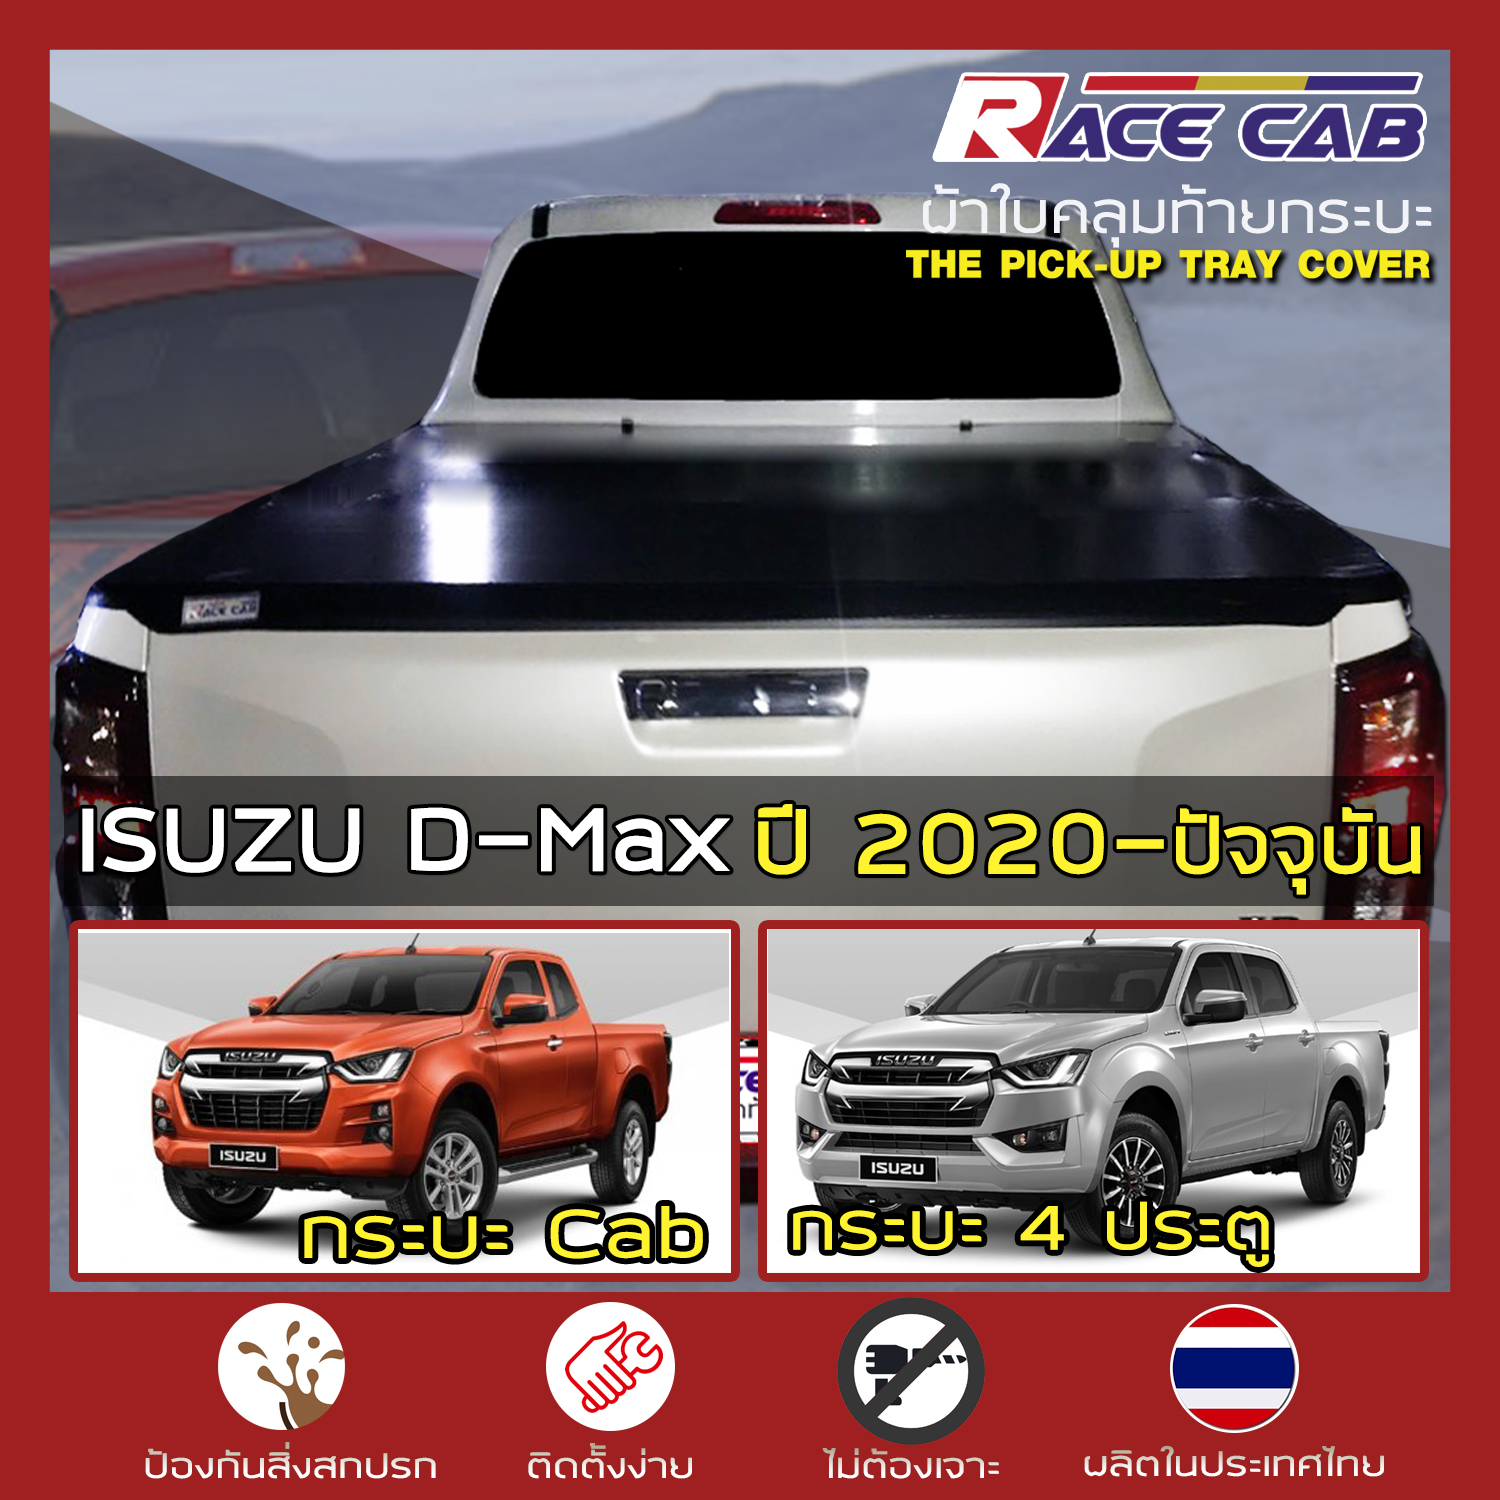 RACE ผ้าใบปิดกระบะ D-Max ปี 2020-ปัจจุบัน อีซูซุ ดีแมกซ์ ISUZU Tonneau Cover ผ้าใบคุณภาพ กระบะ ครบชุดพร้อมติดตั้ง